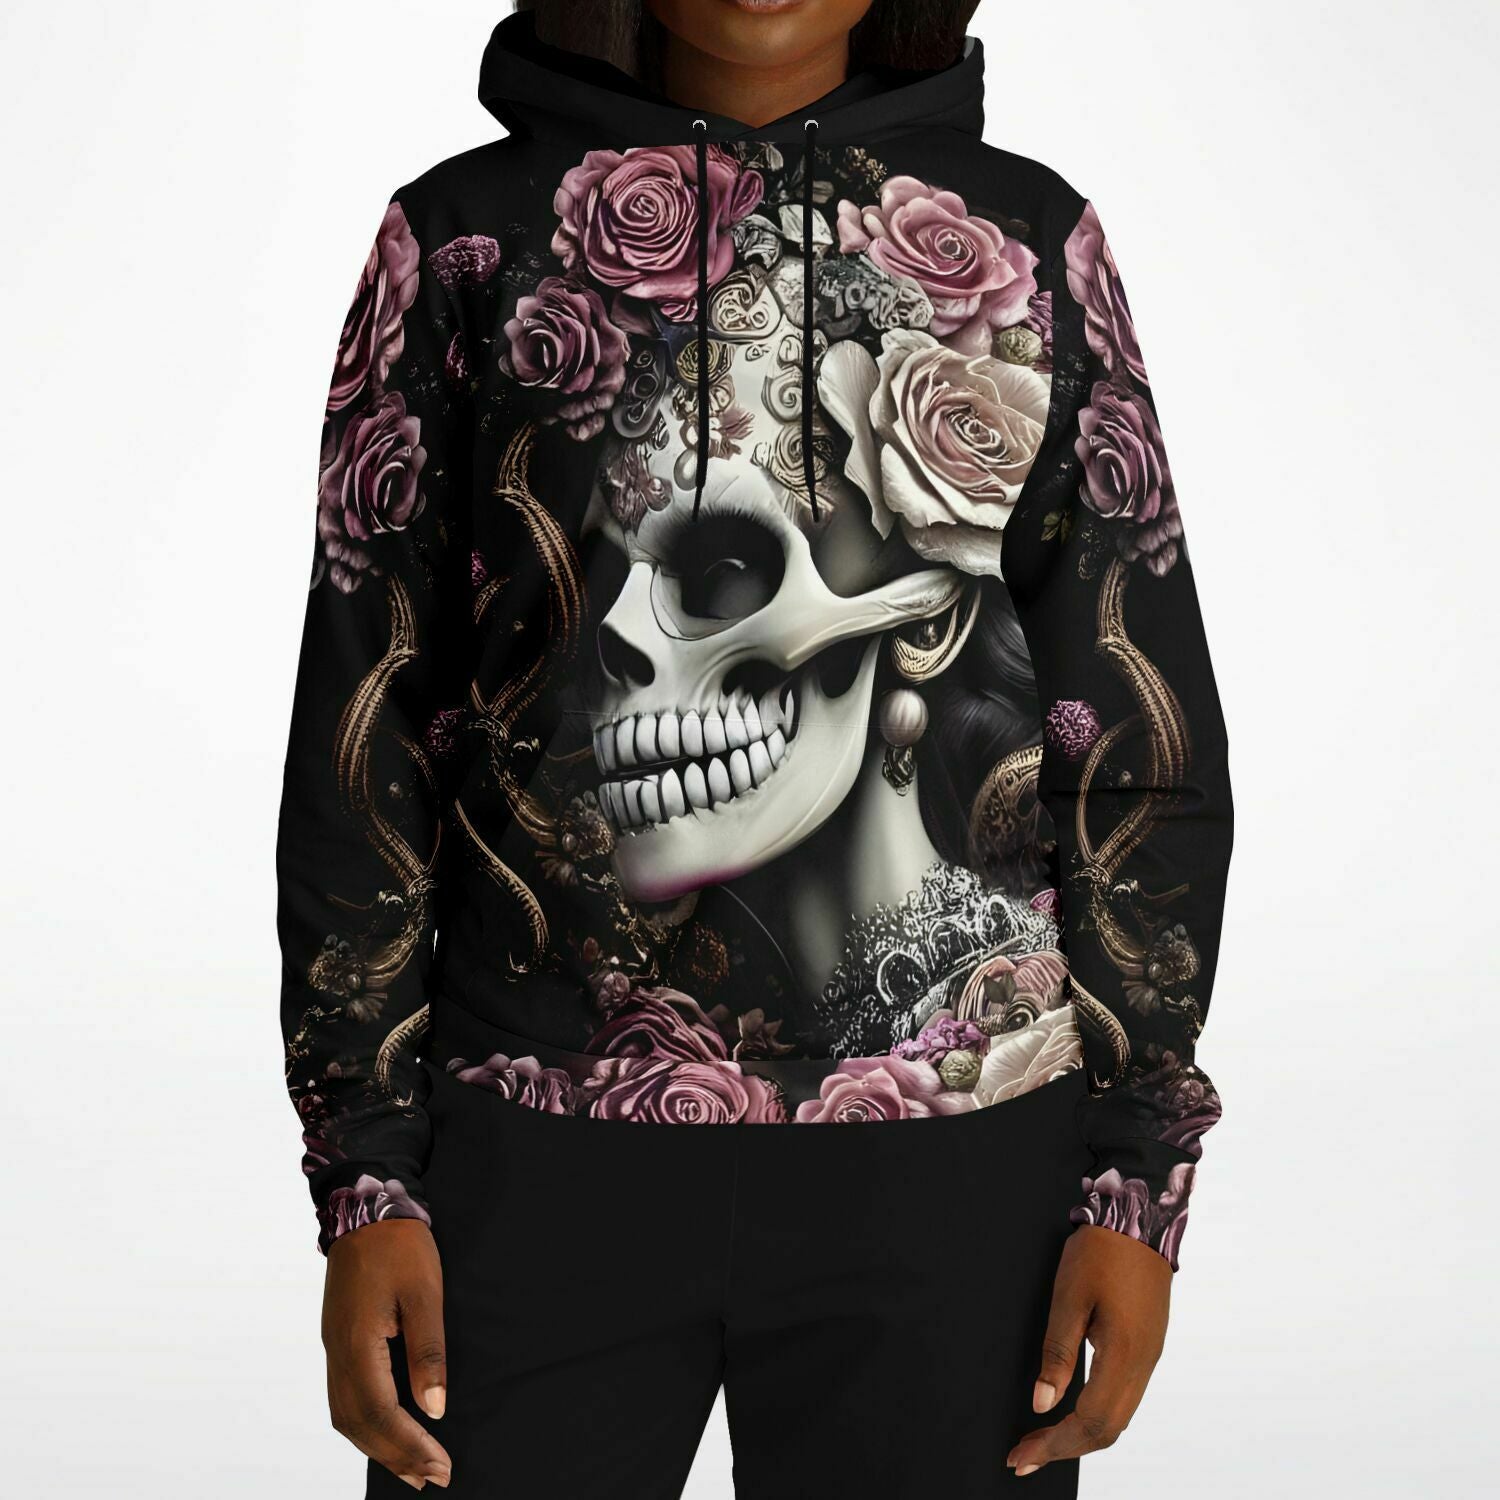 Rose Skull Lady Fashion Hoodie